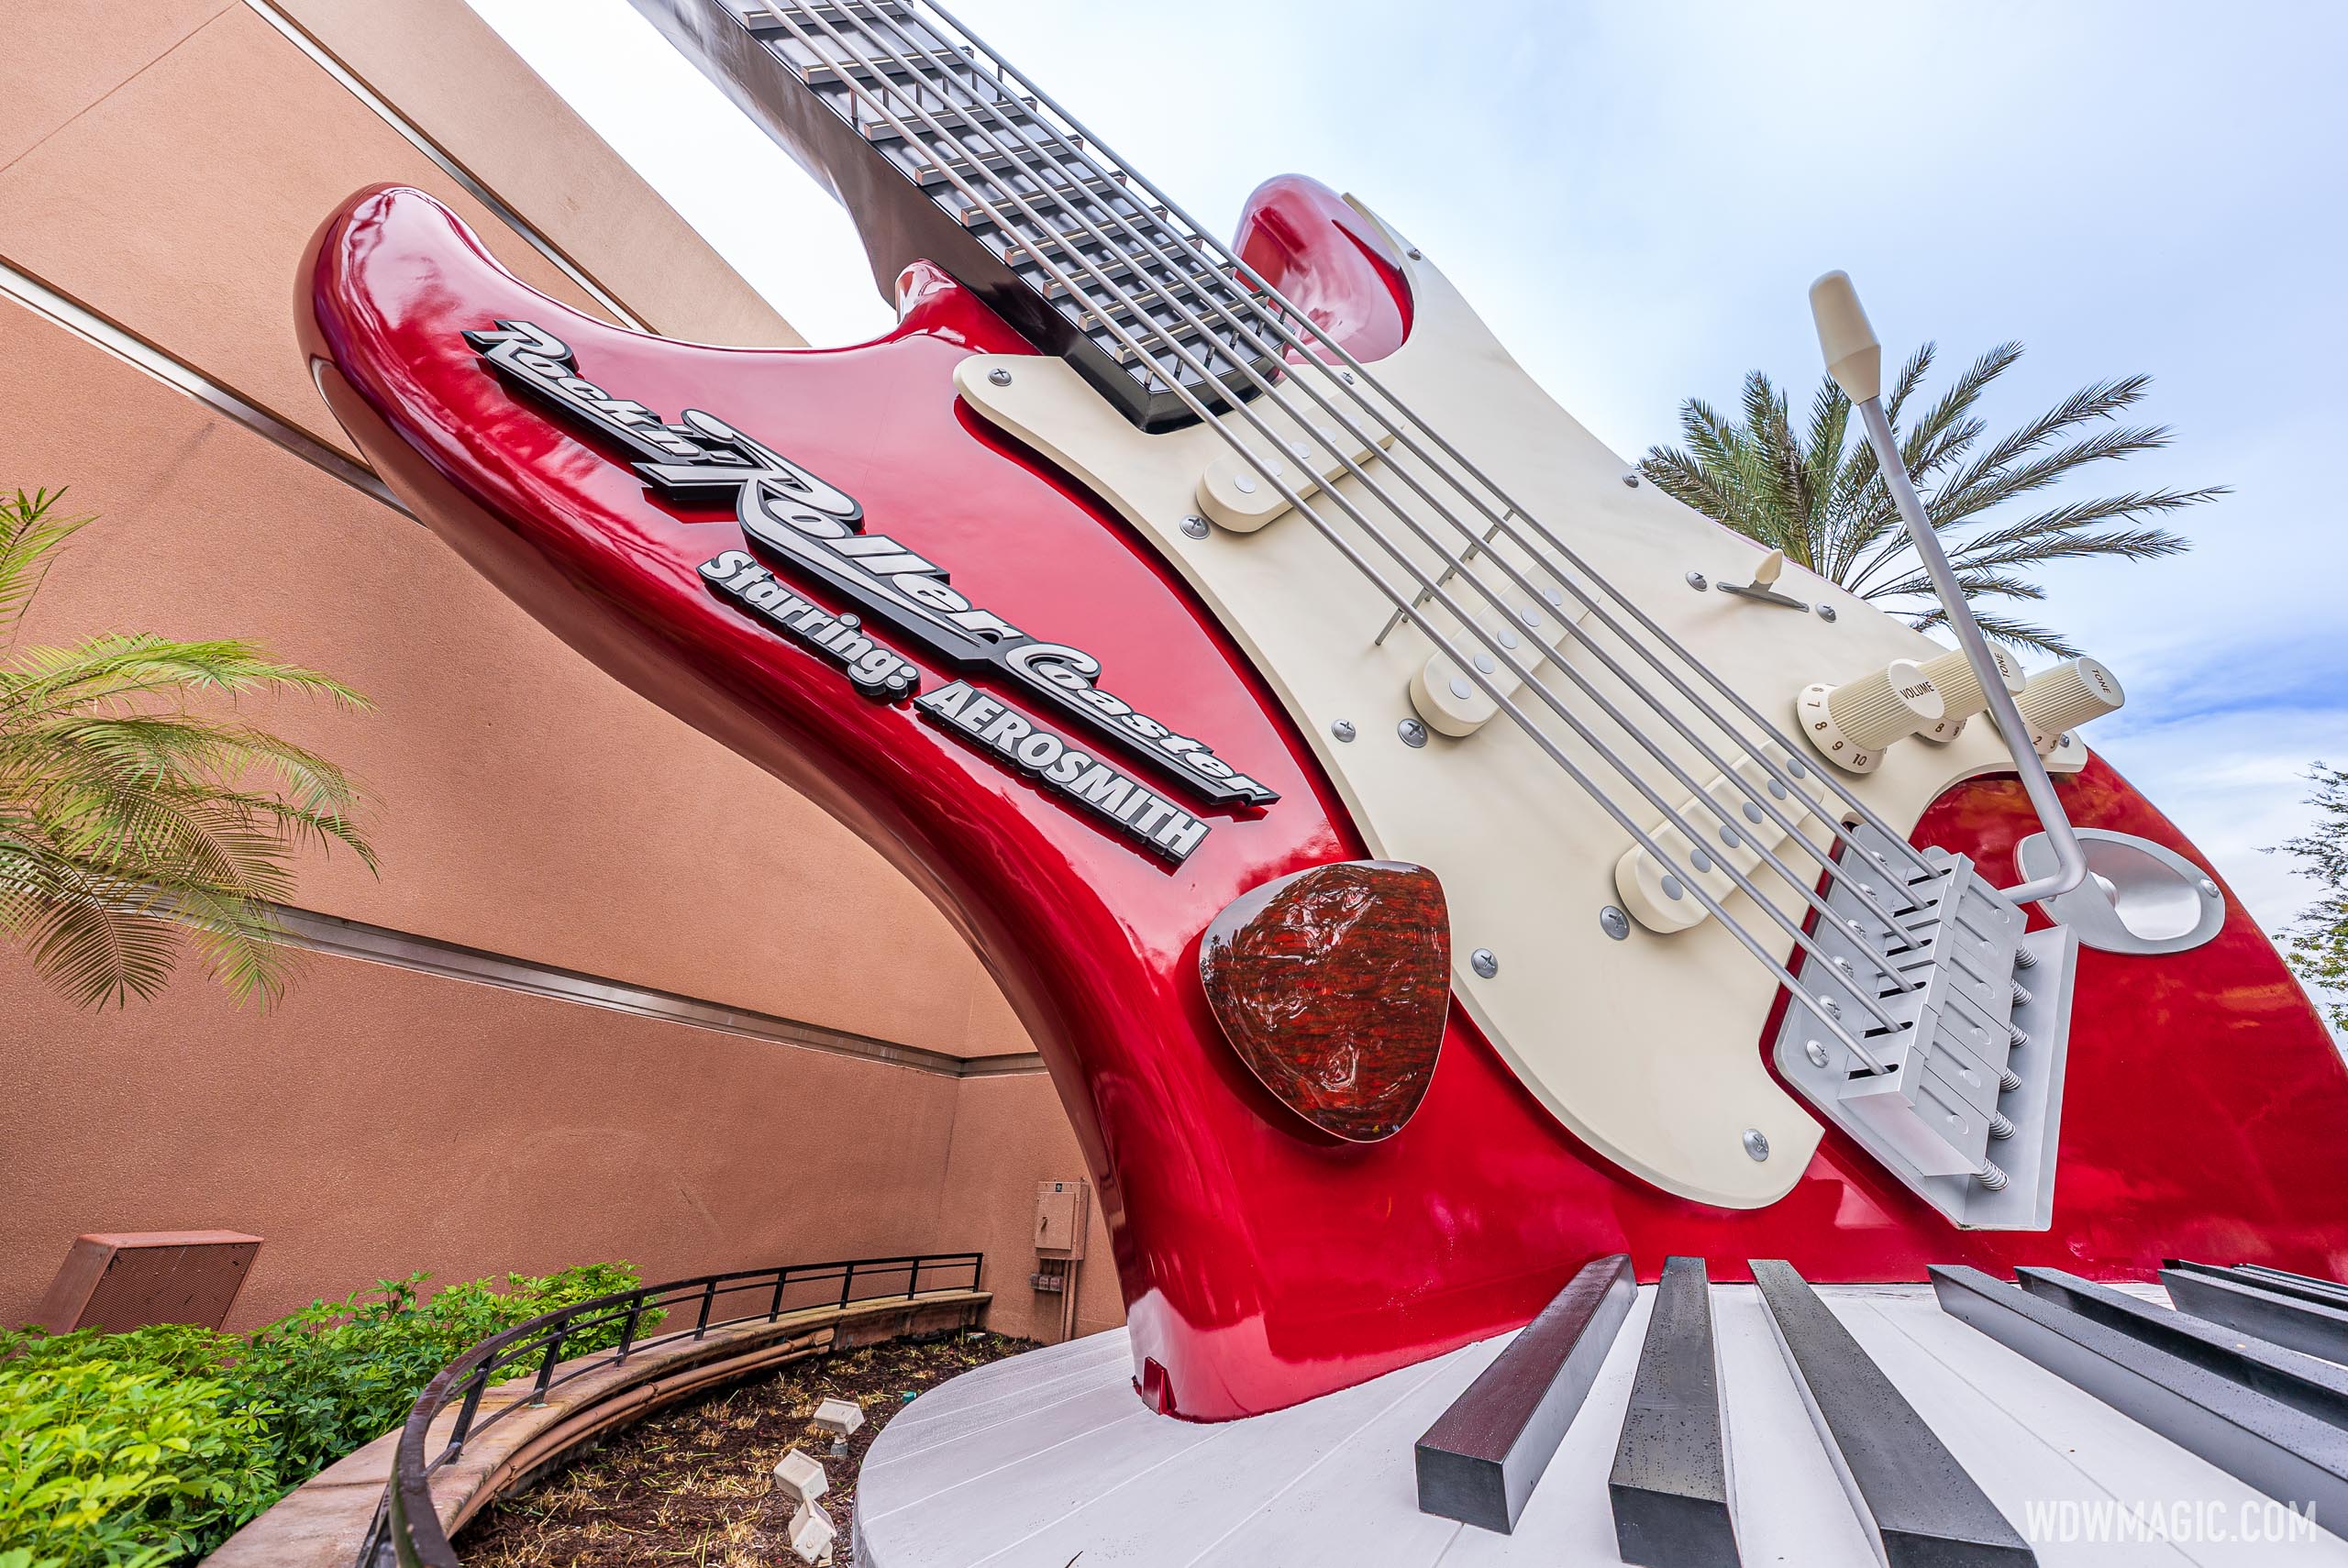 Rock 'n' Roller Coaster at Disney World's Hollywood Studios